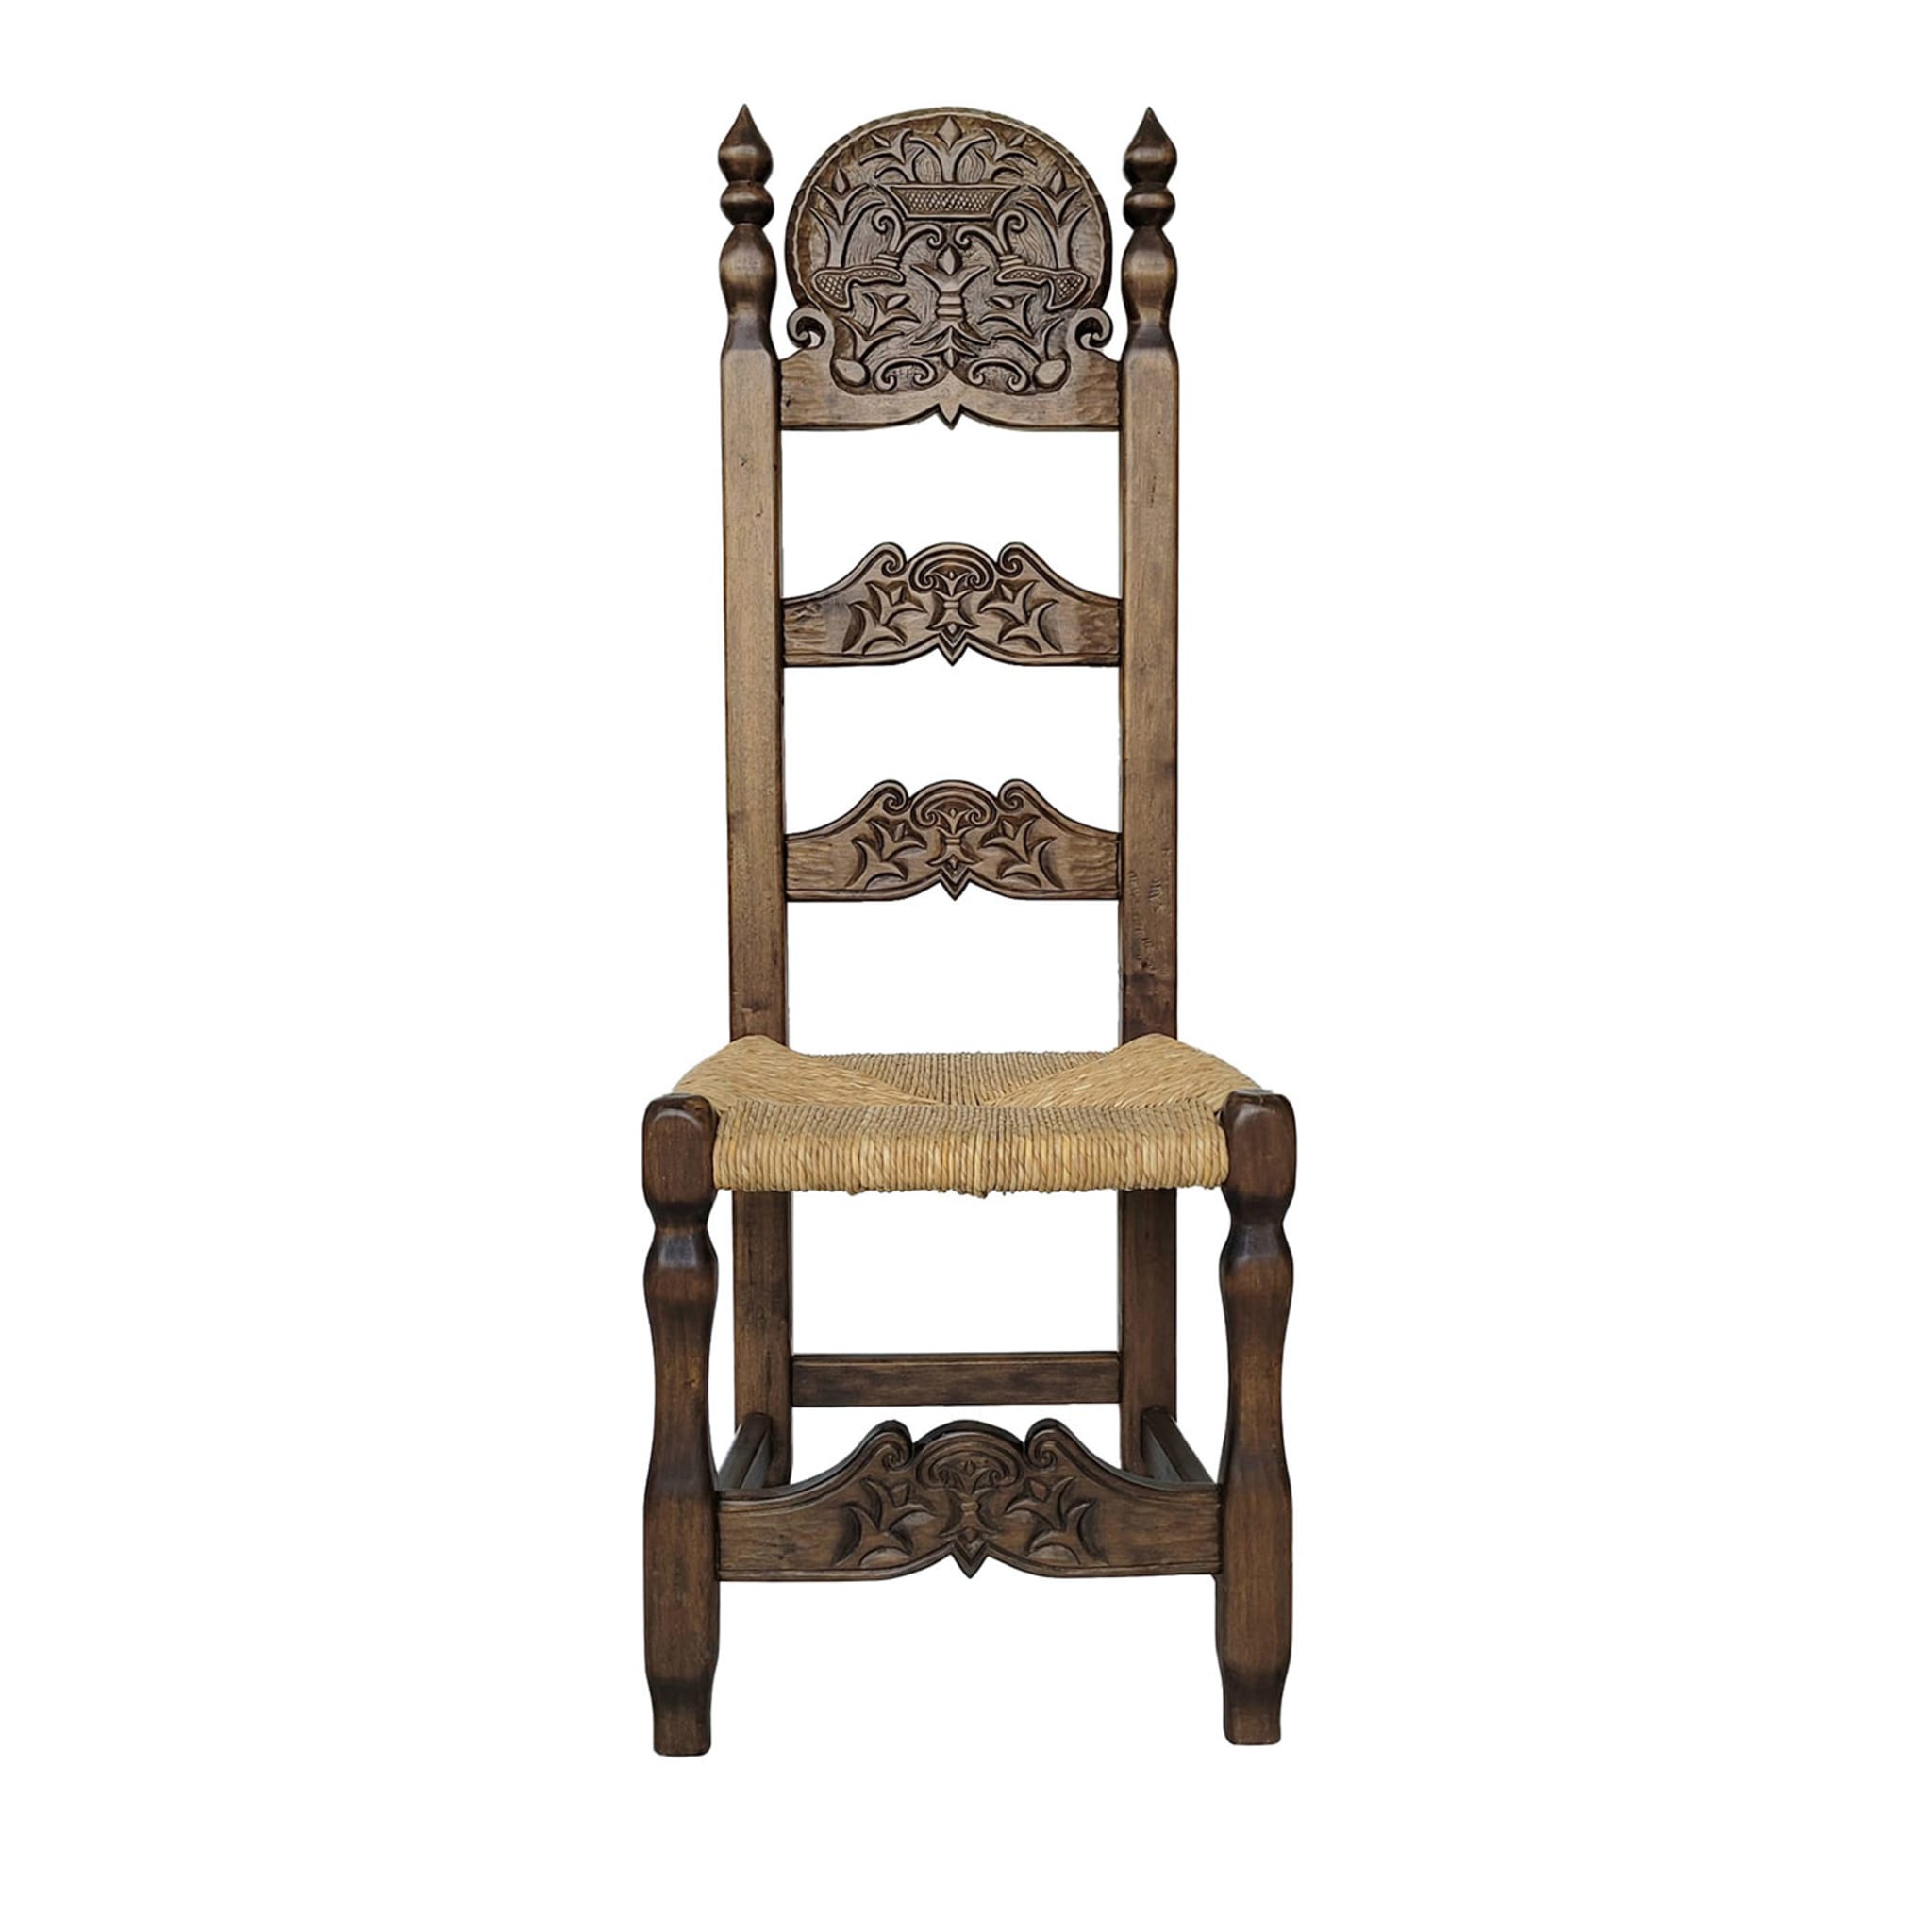 Matrona Sardinian-Spanish Inlaid Chair - Main view